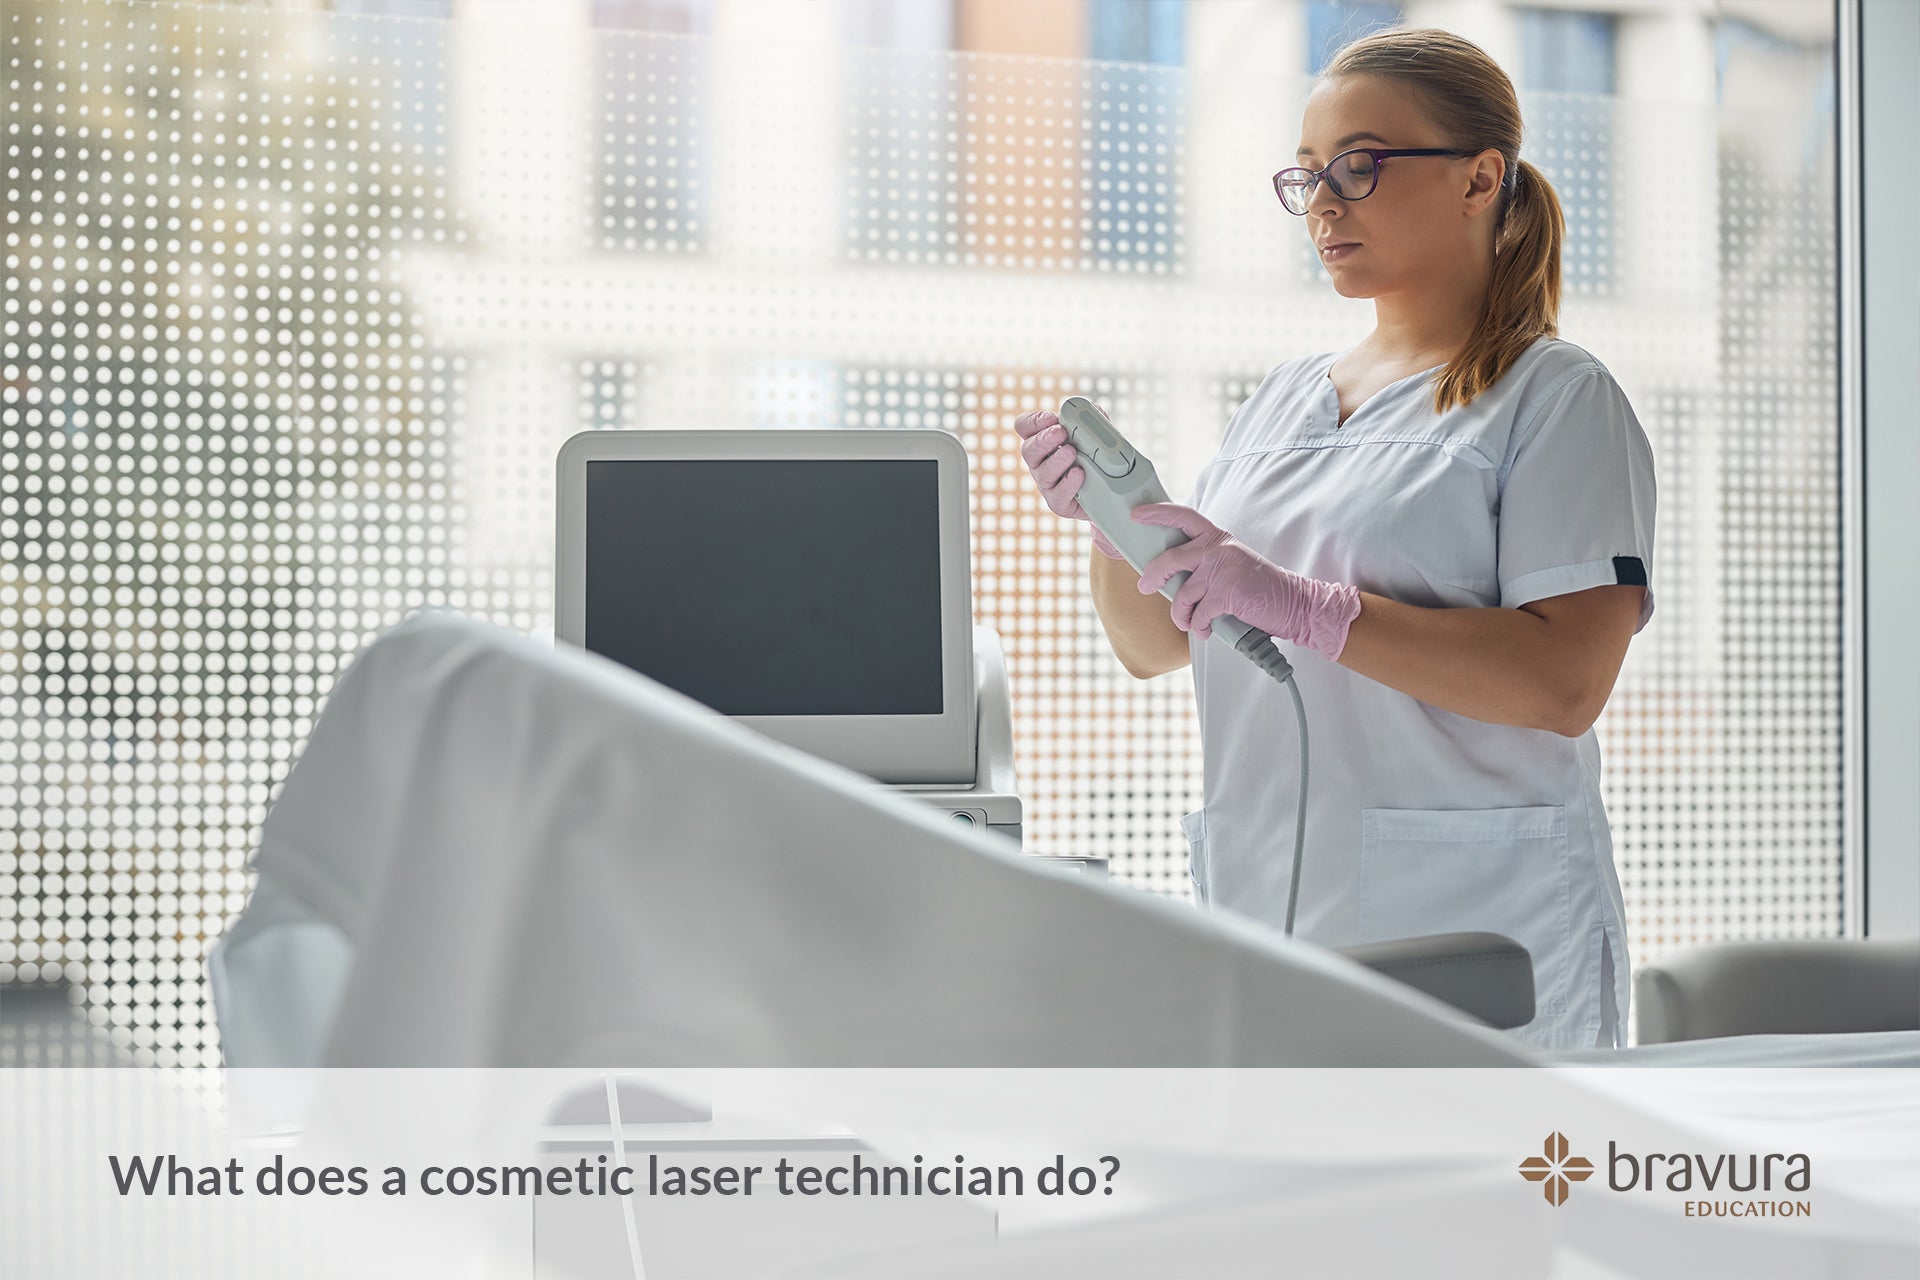 Cosmetic laser technician